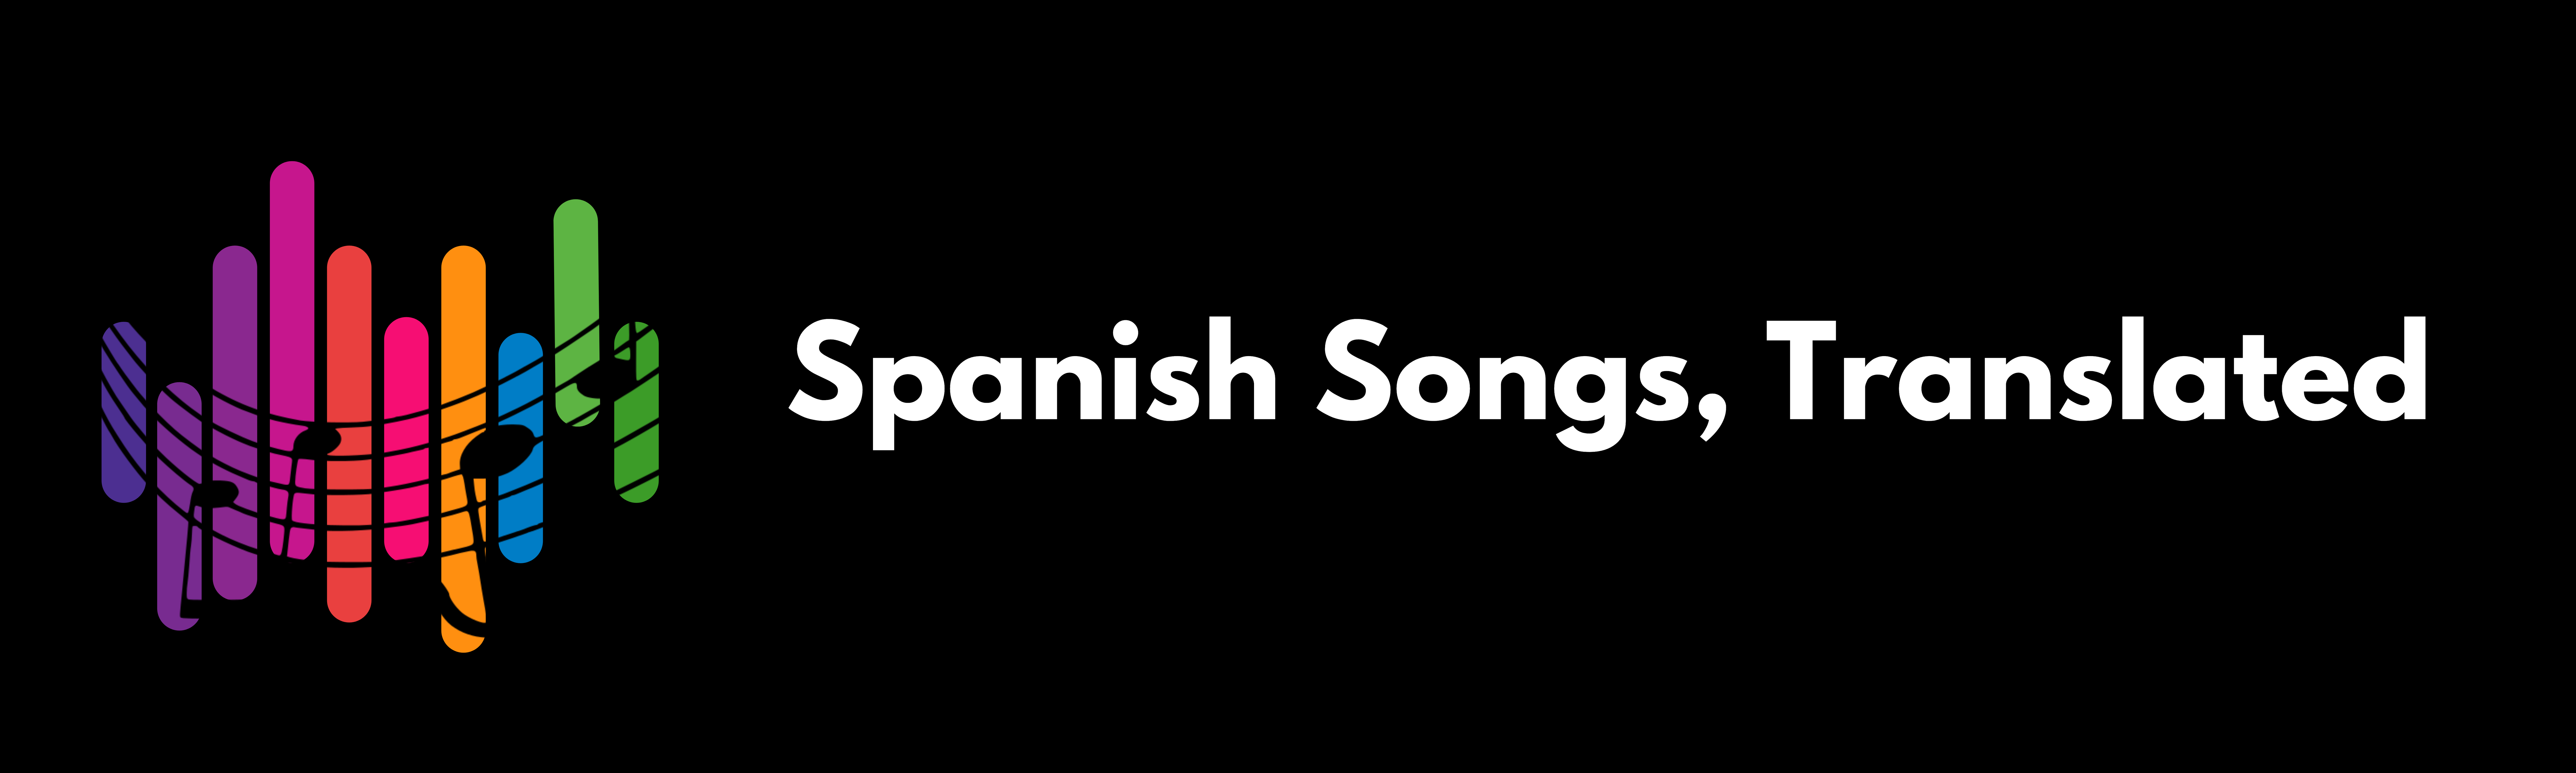 Spanish Songs, Translated